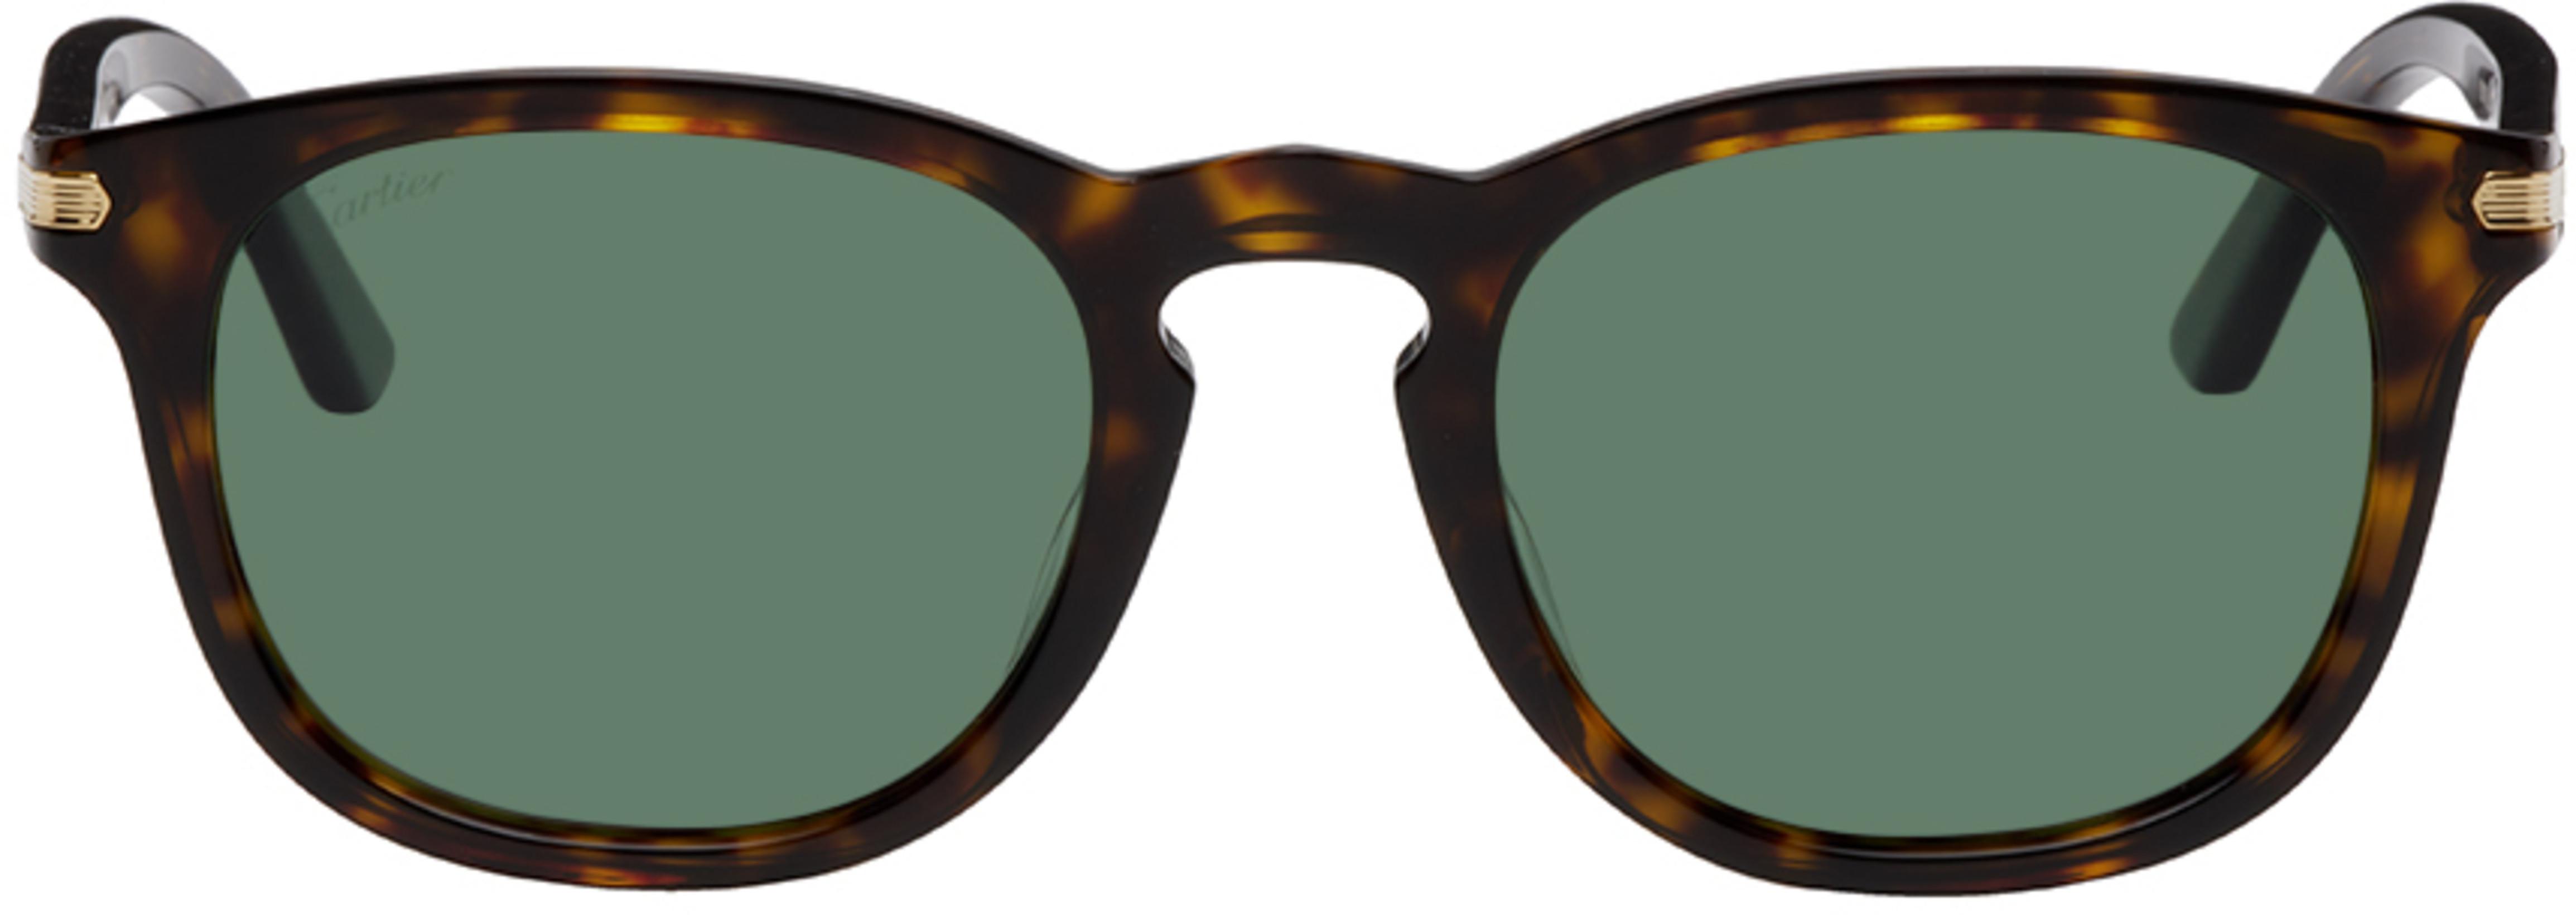 Tortoiseshell Oval Sunglasses by CARTIER